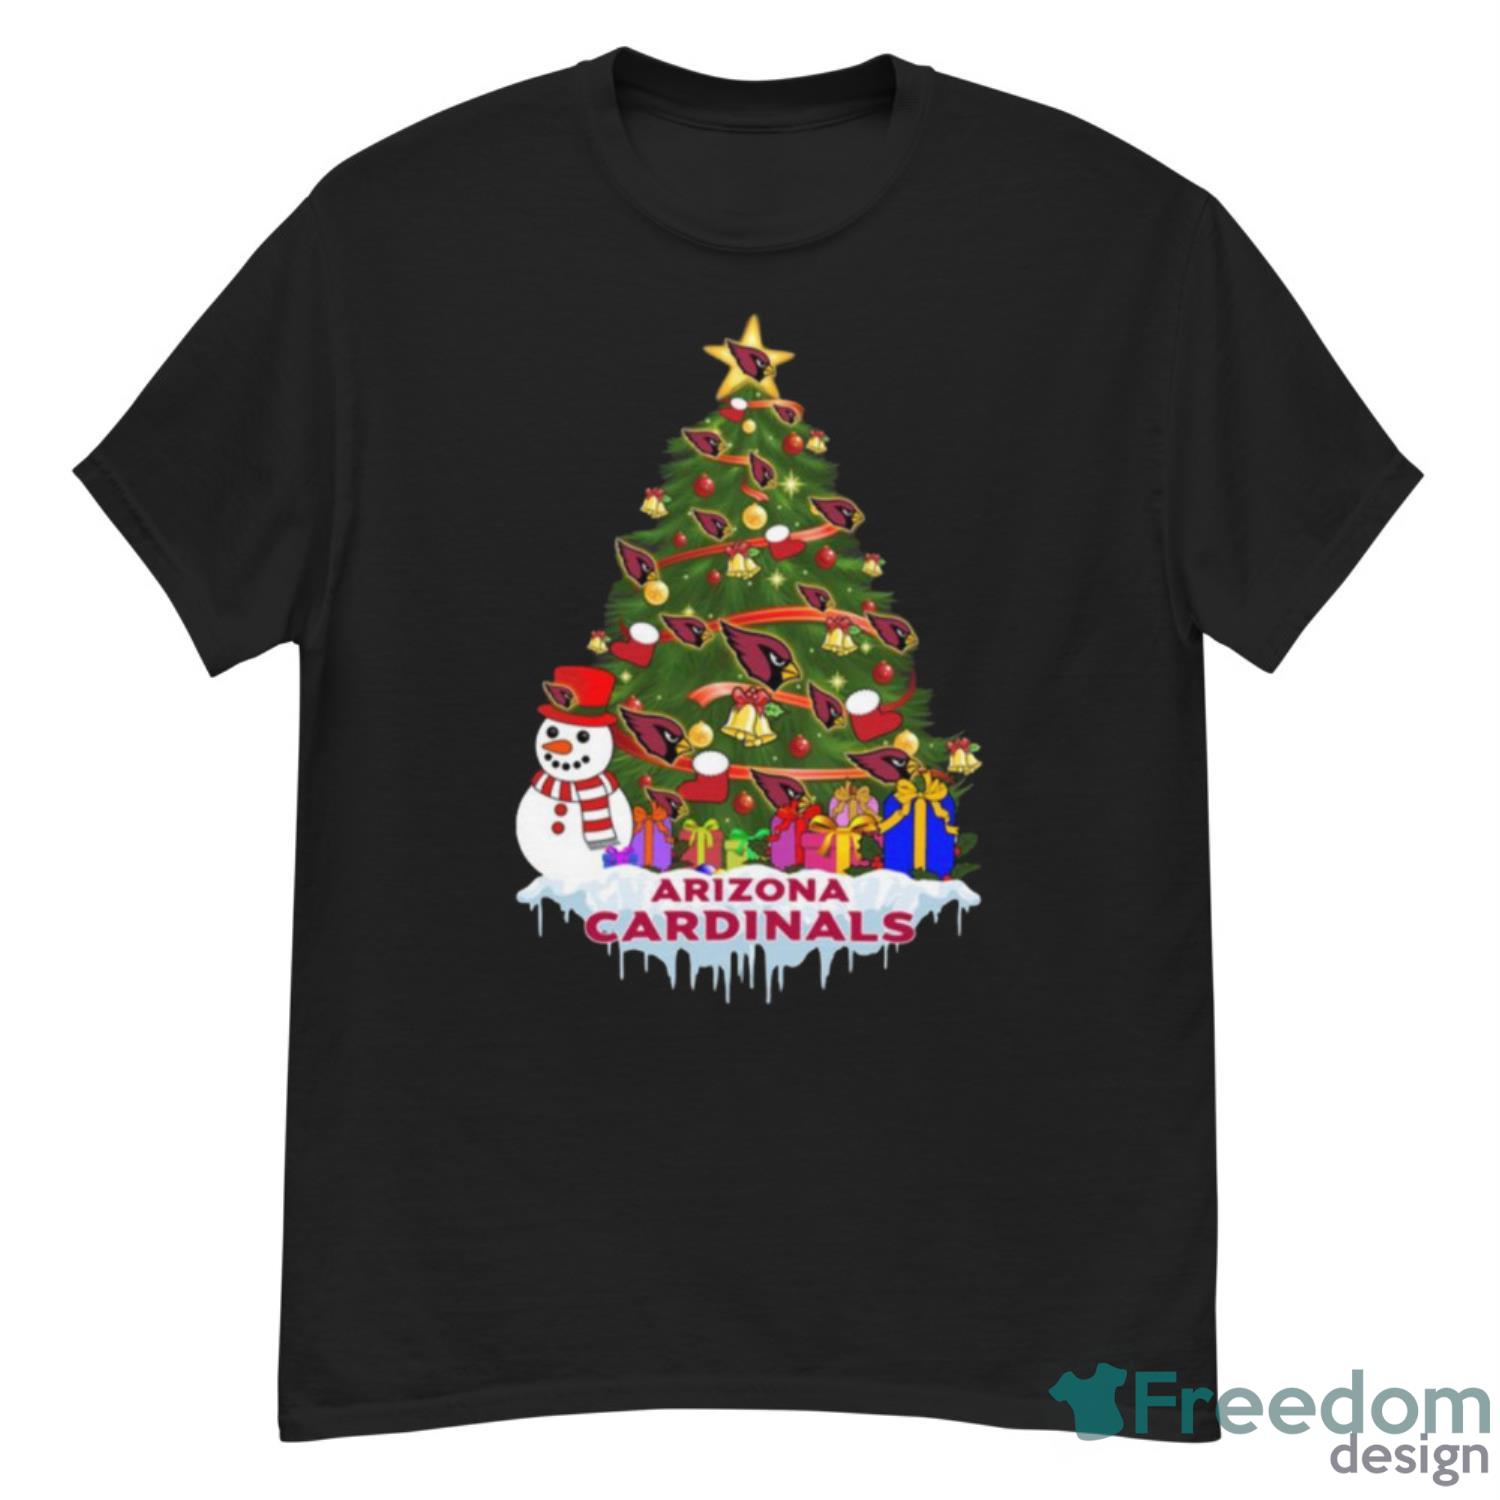 Arizona Cardinals Merry Christmas Nfl Football Sports Shirt - G500 Men’s Classic T-Shirt